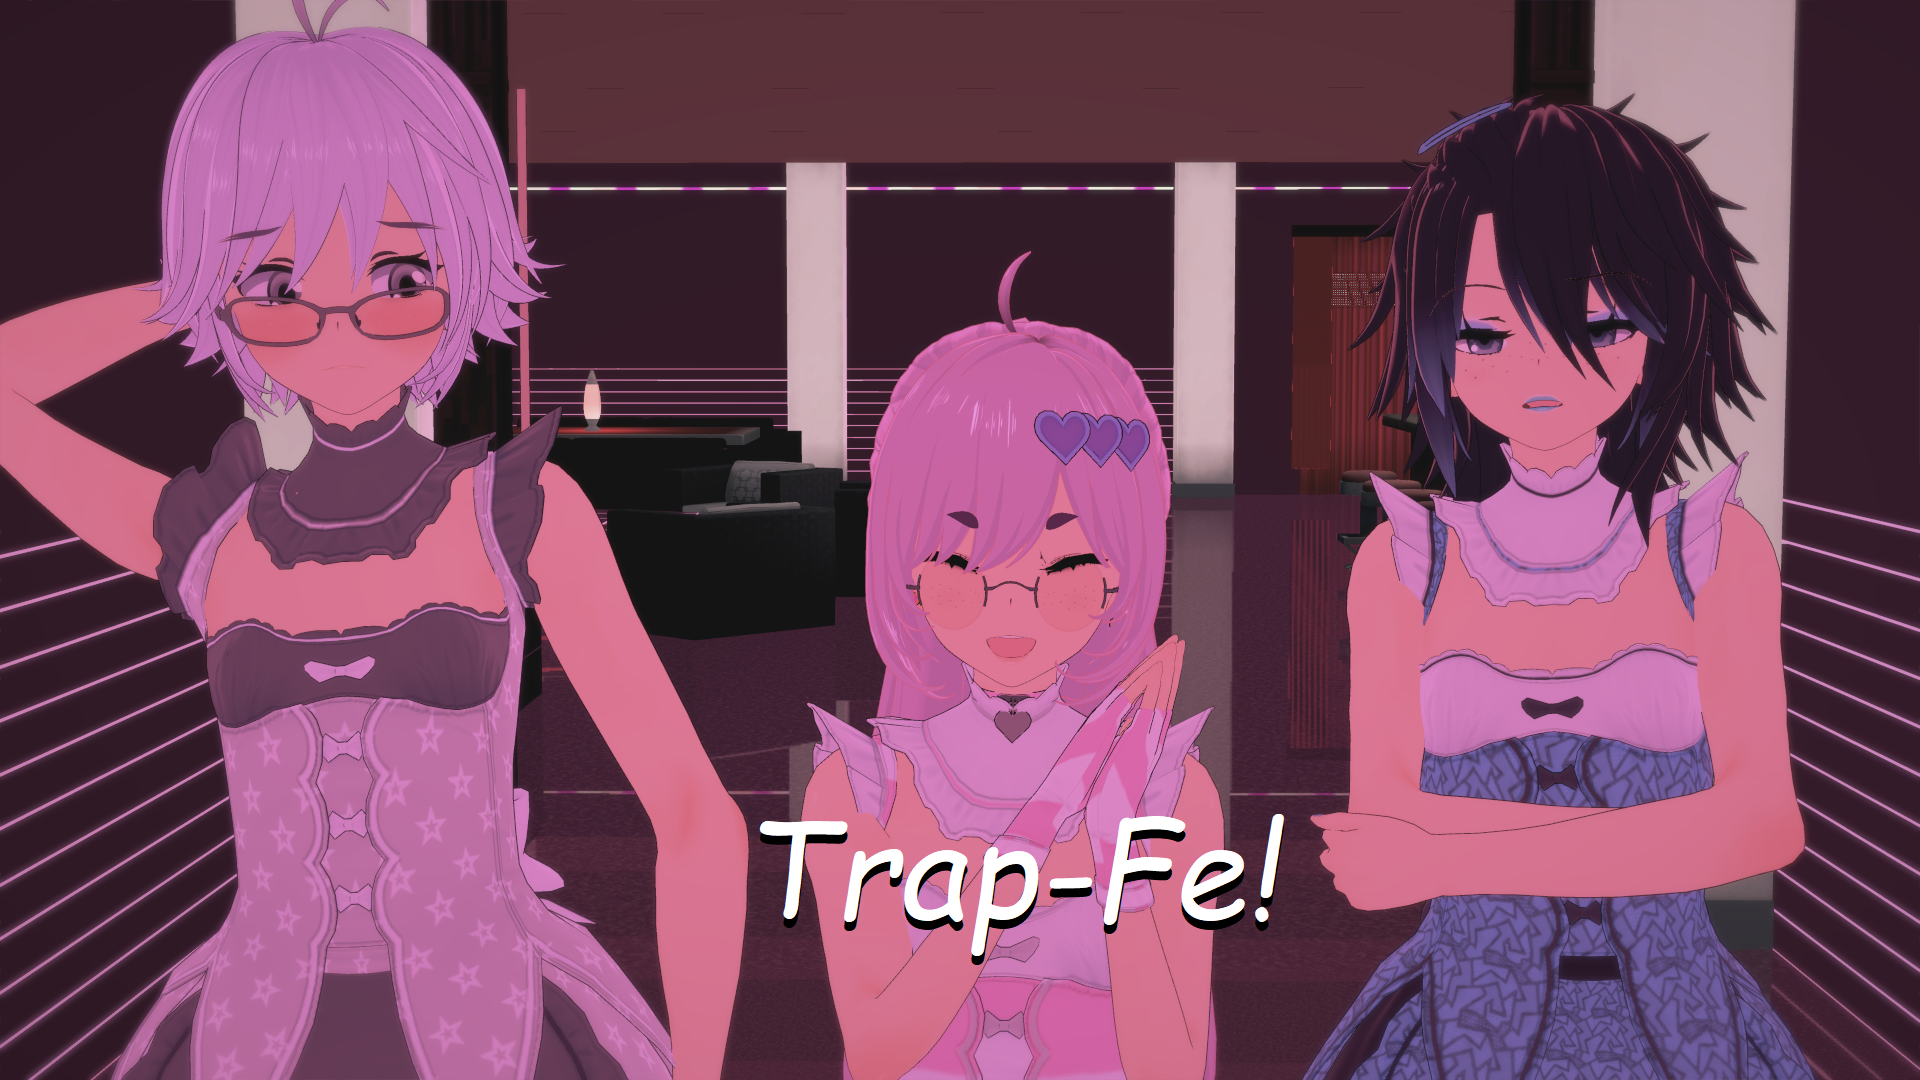 Trap-fe!